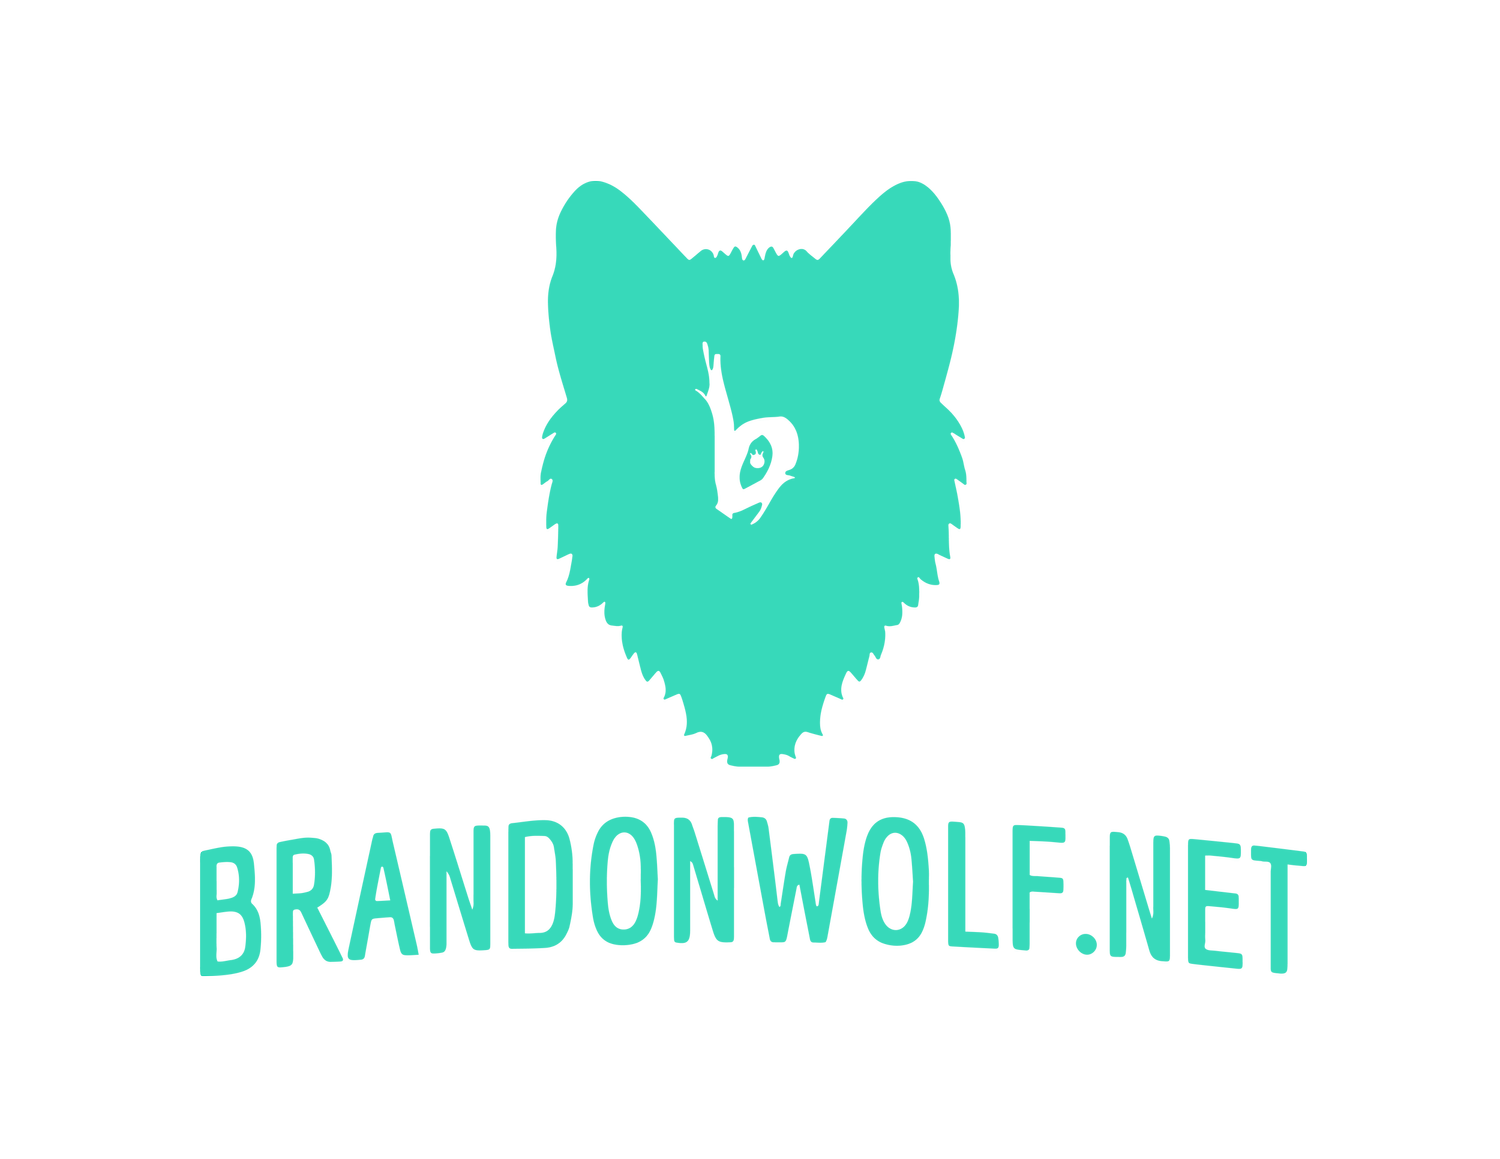 Brandon Wolf